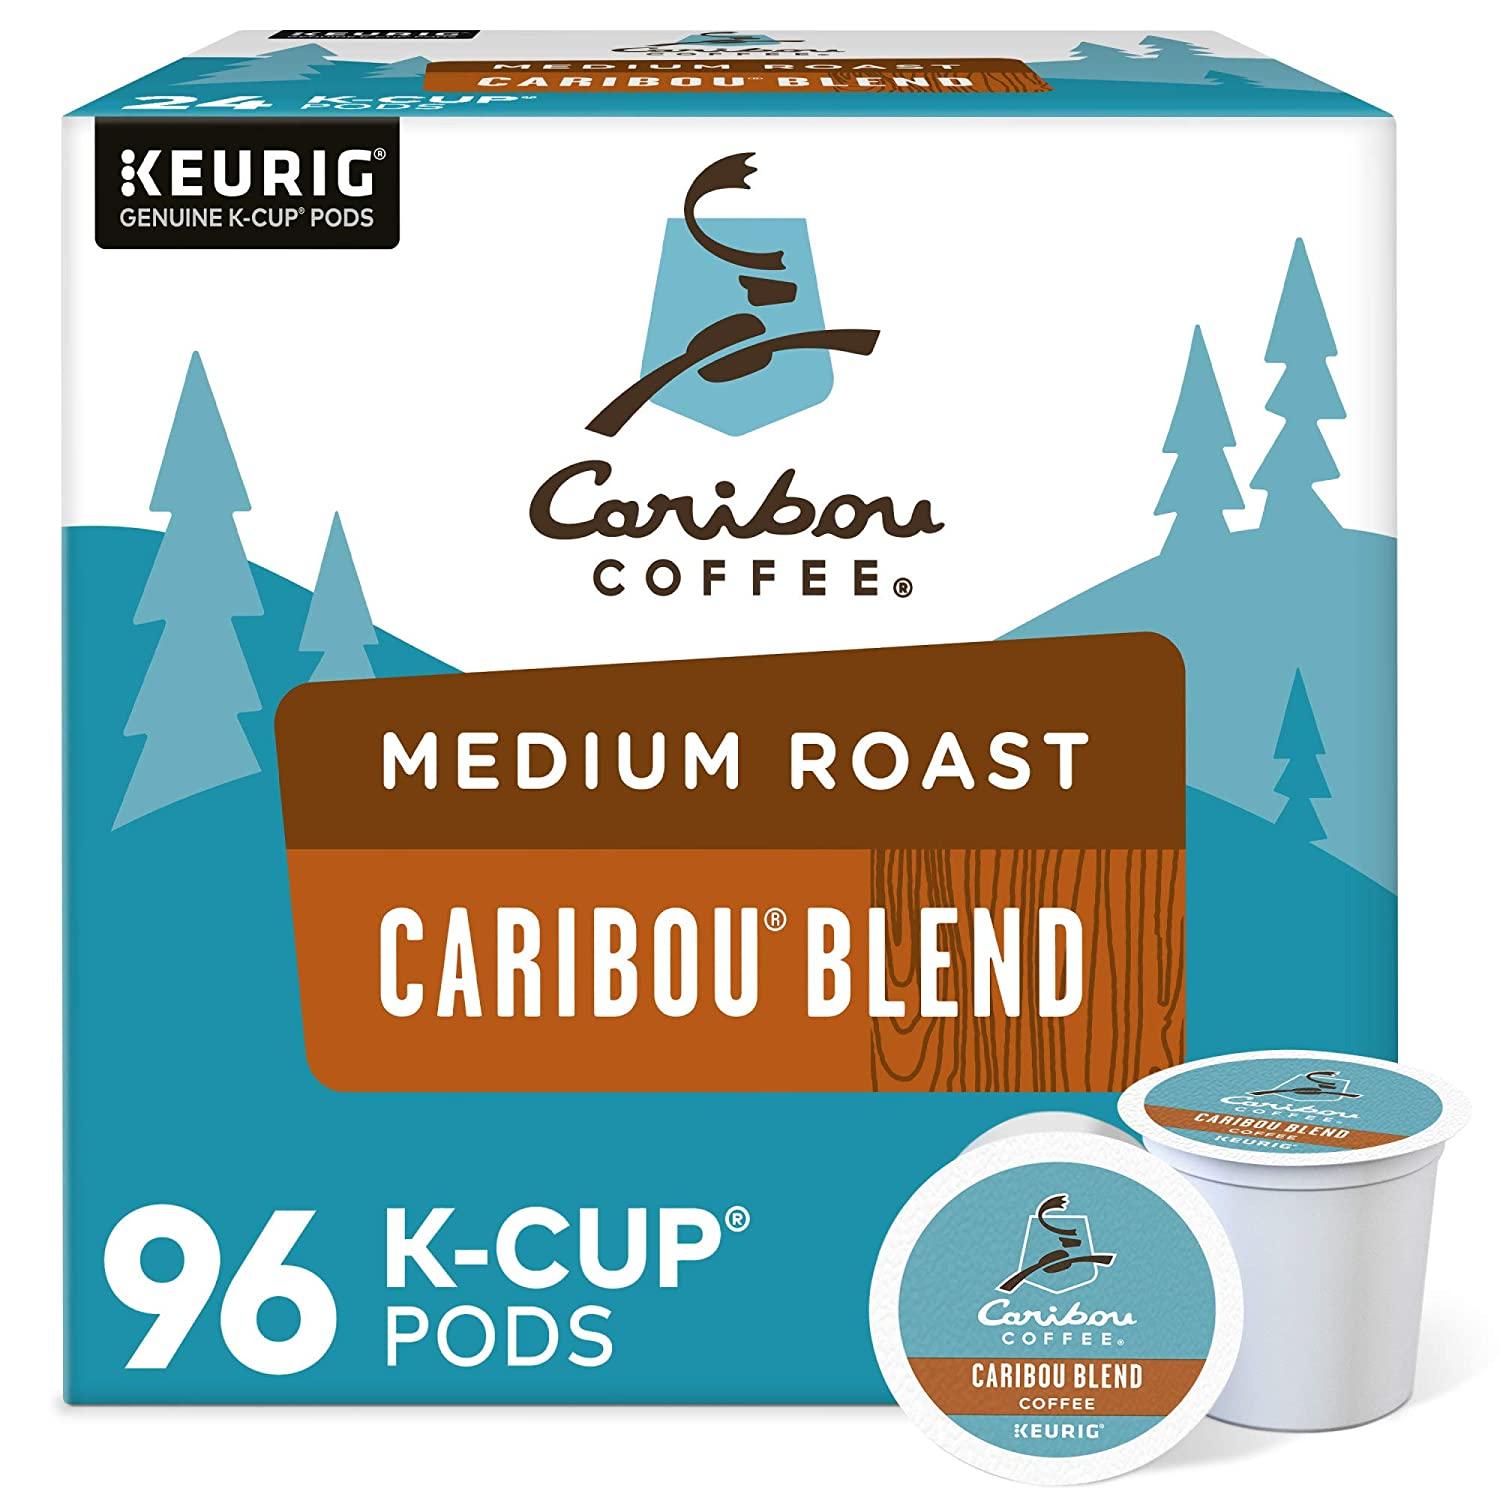 96 Caribou Coffee Blend Medium Roast Keurig K-Cups for $33.73 Shipped